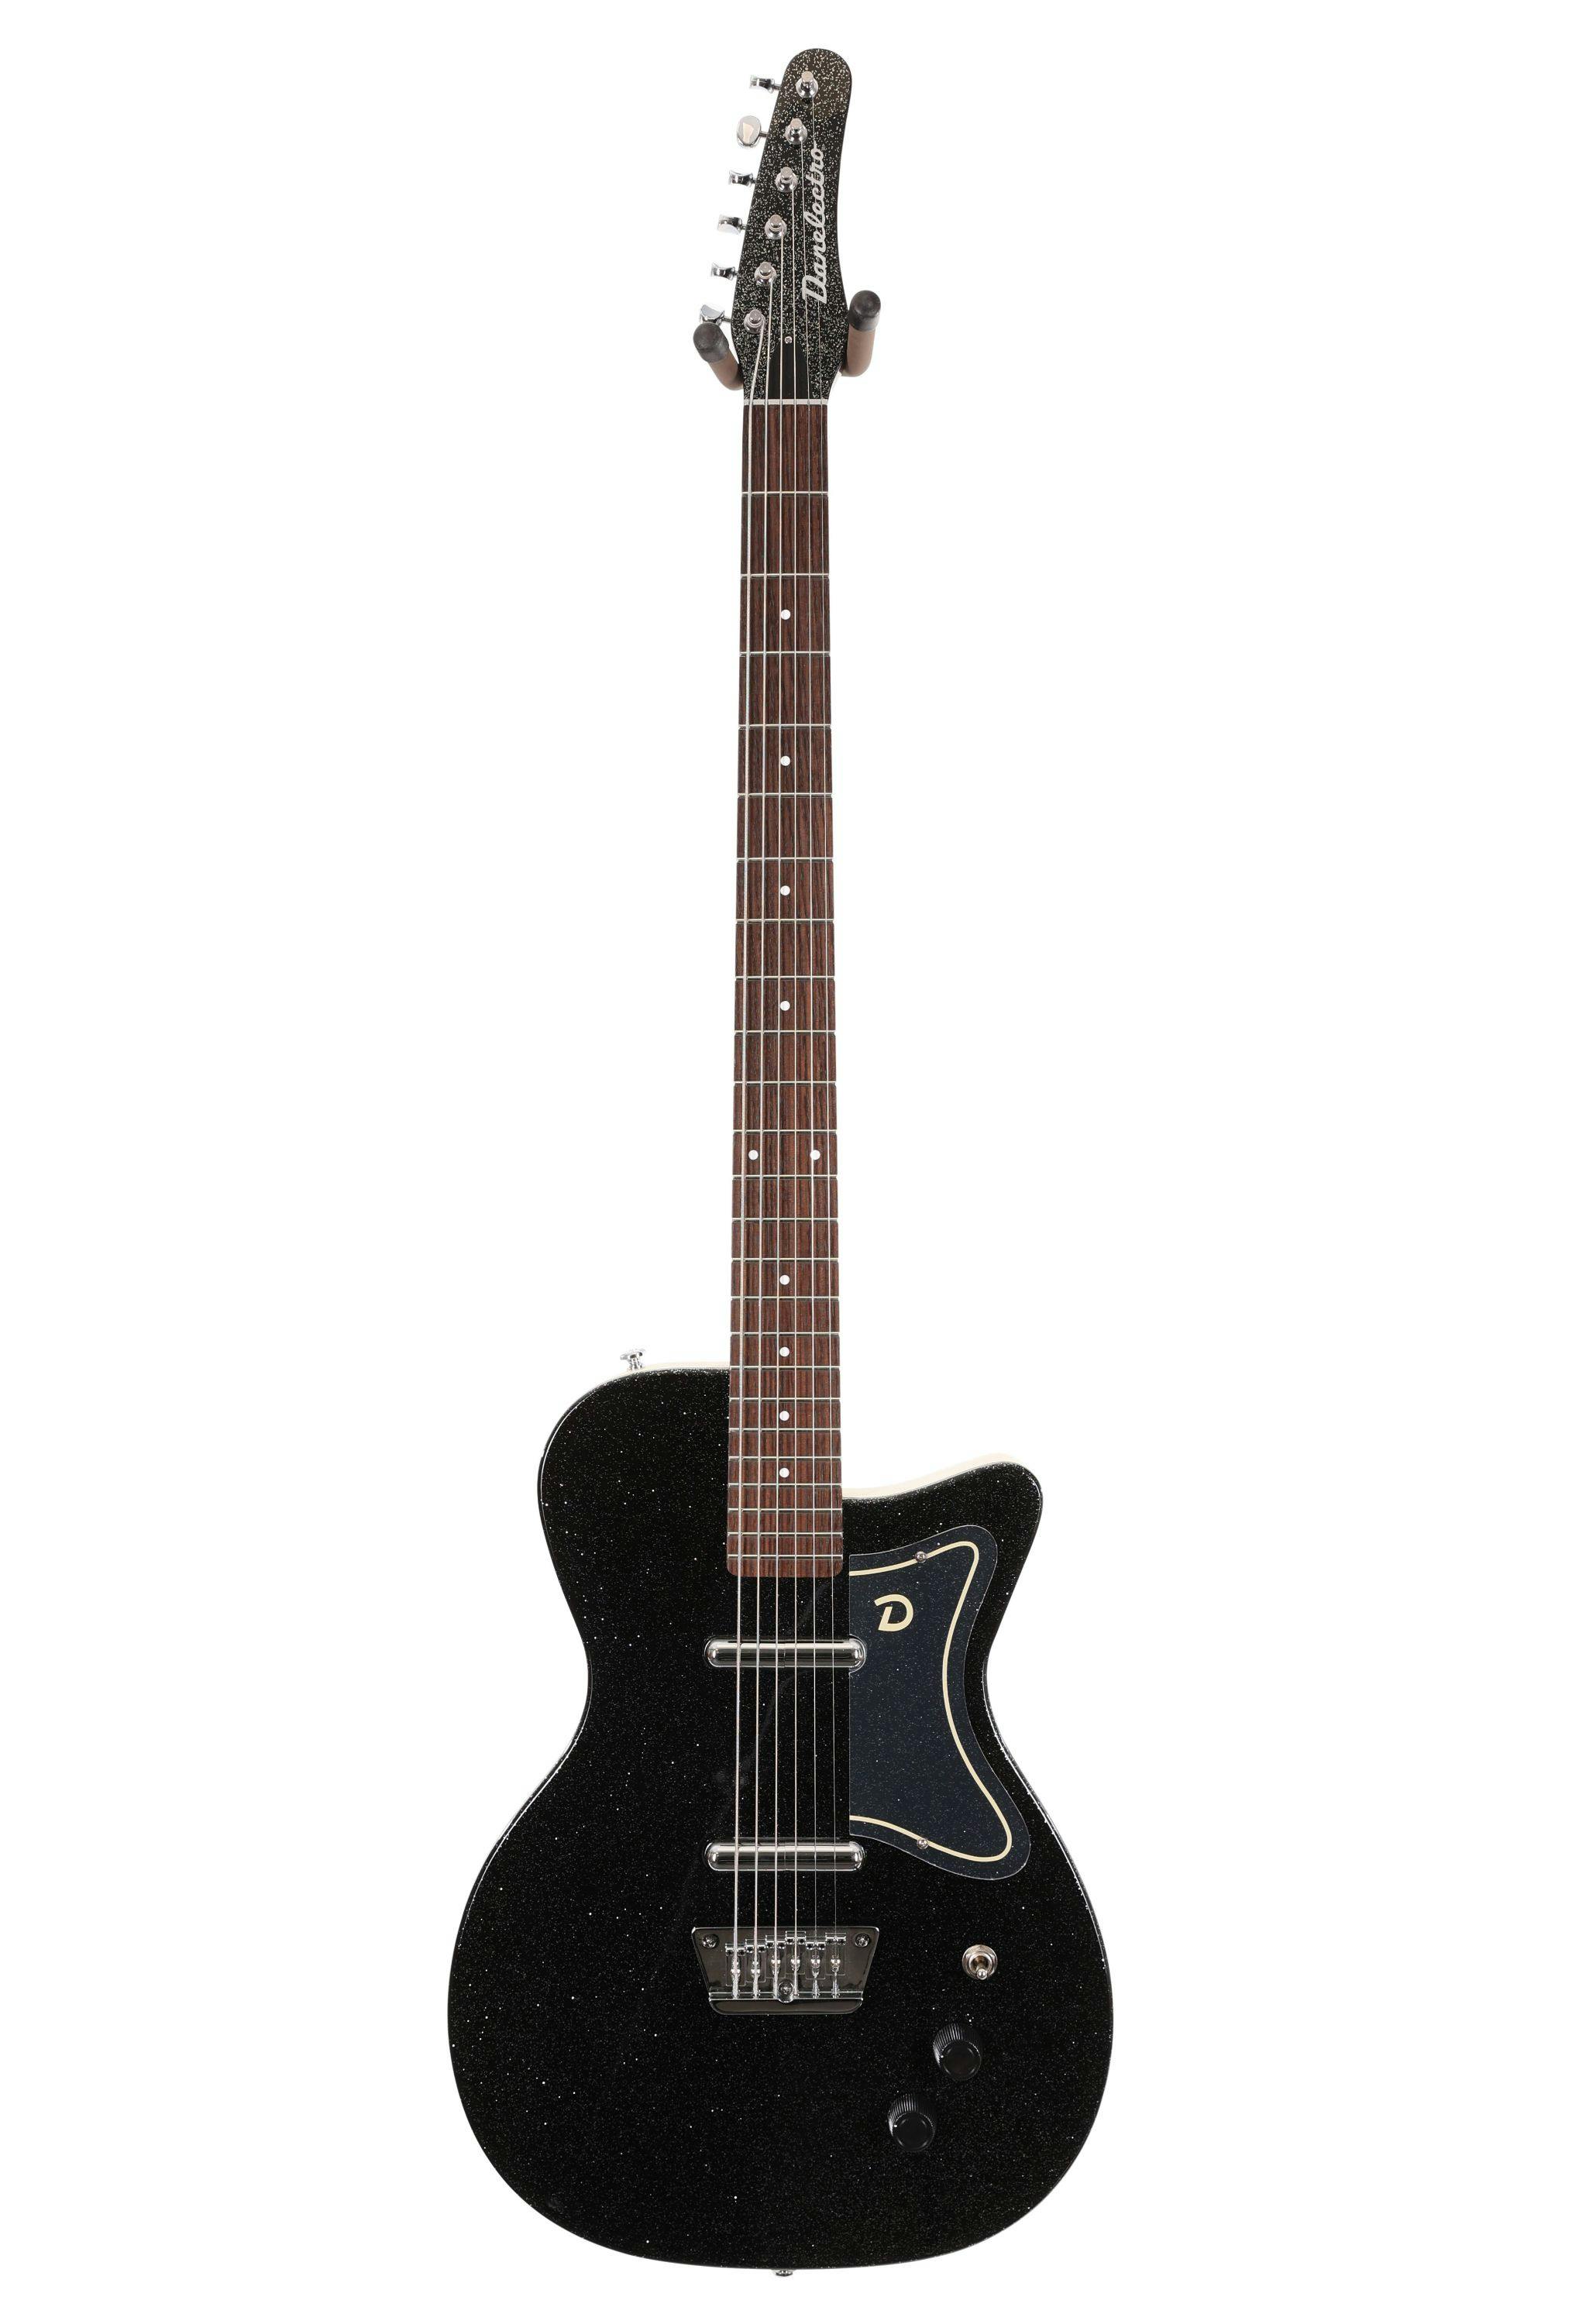 Danelectro 56 Baritone Electric Guitar in Black Sparkle 